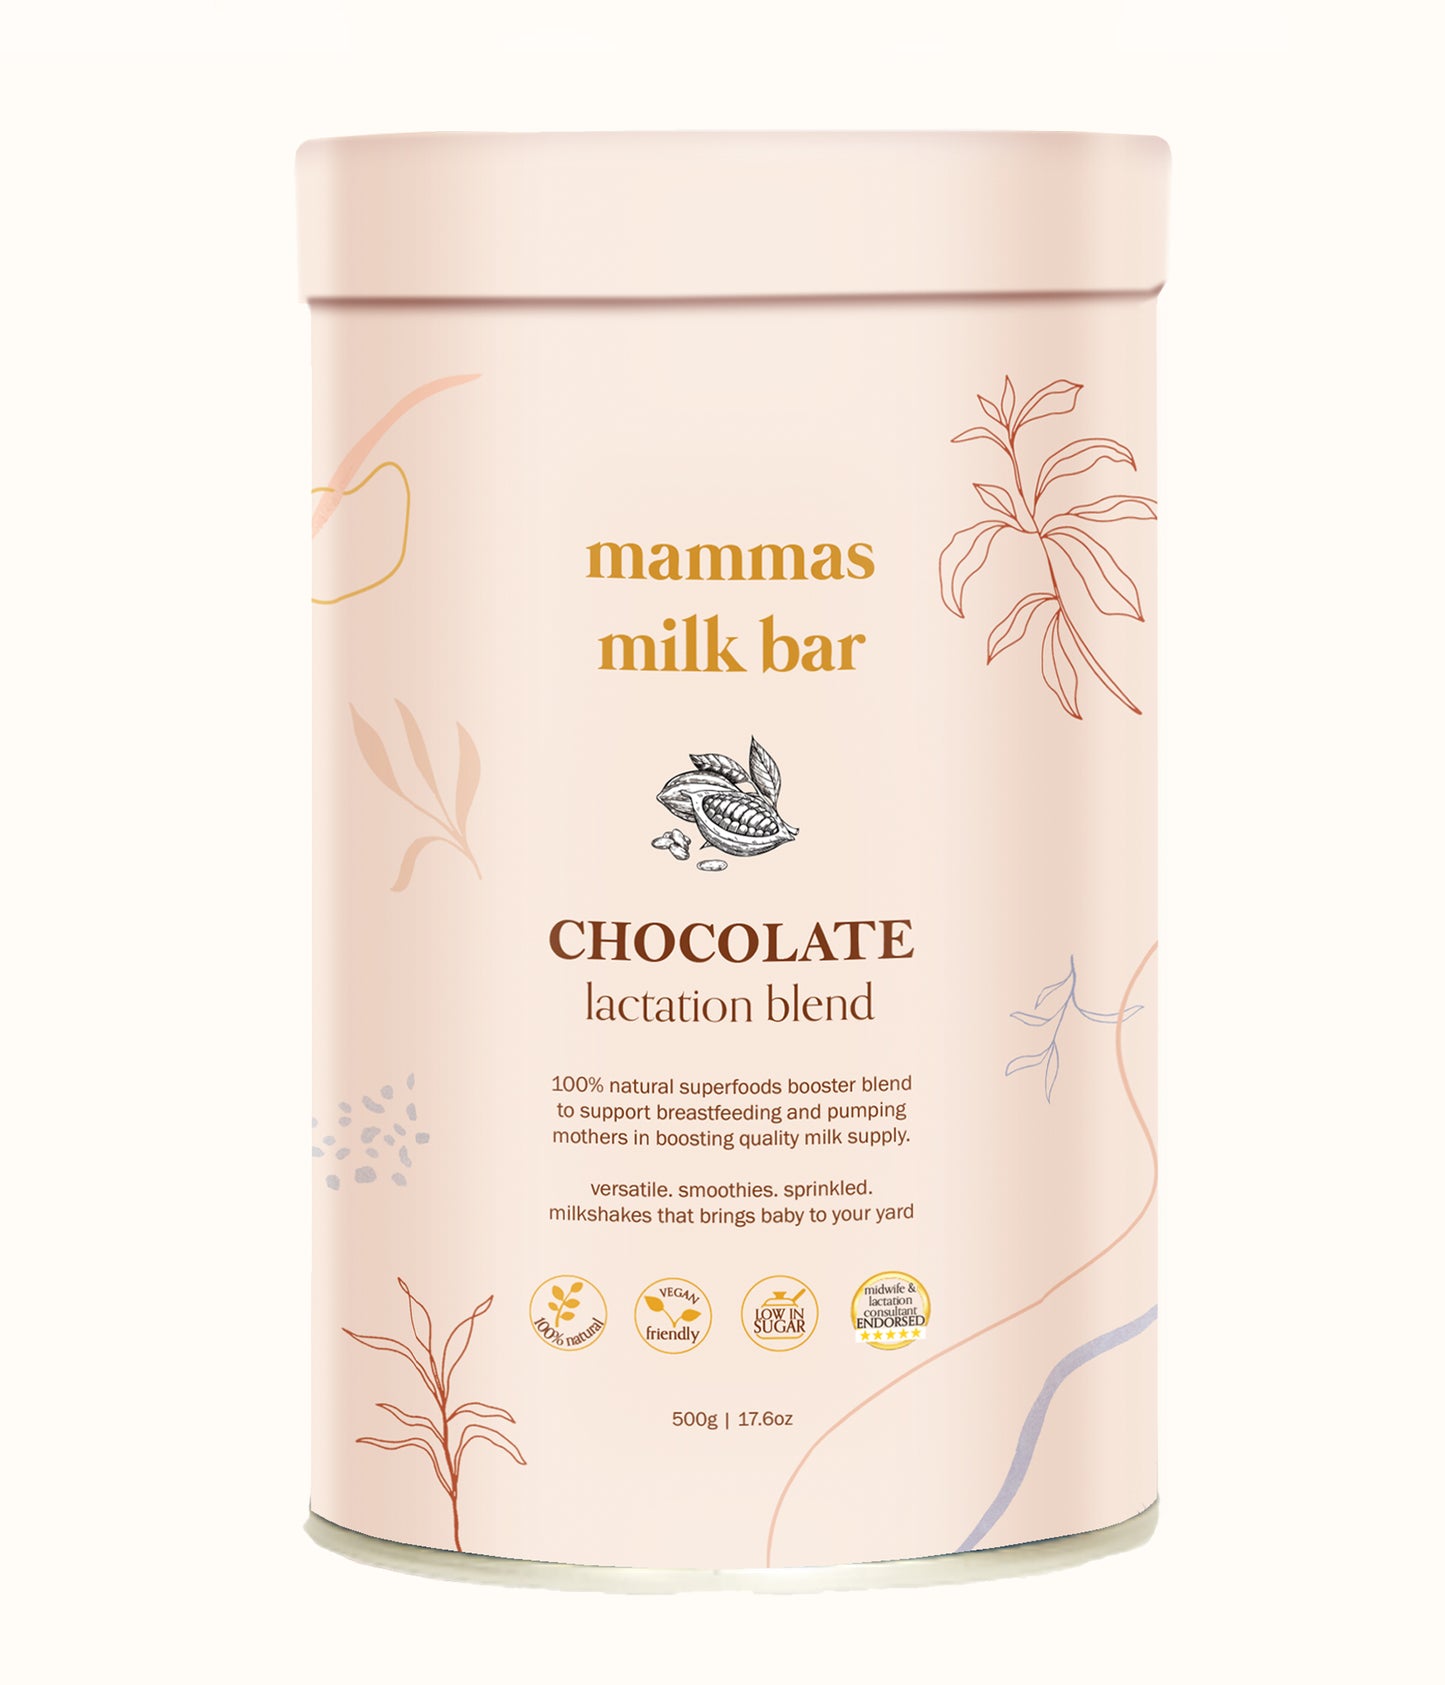 Chocolate lactation blend mammas milk bar nz. Flourish Maternity New Zealand.